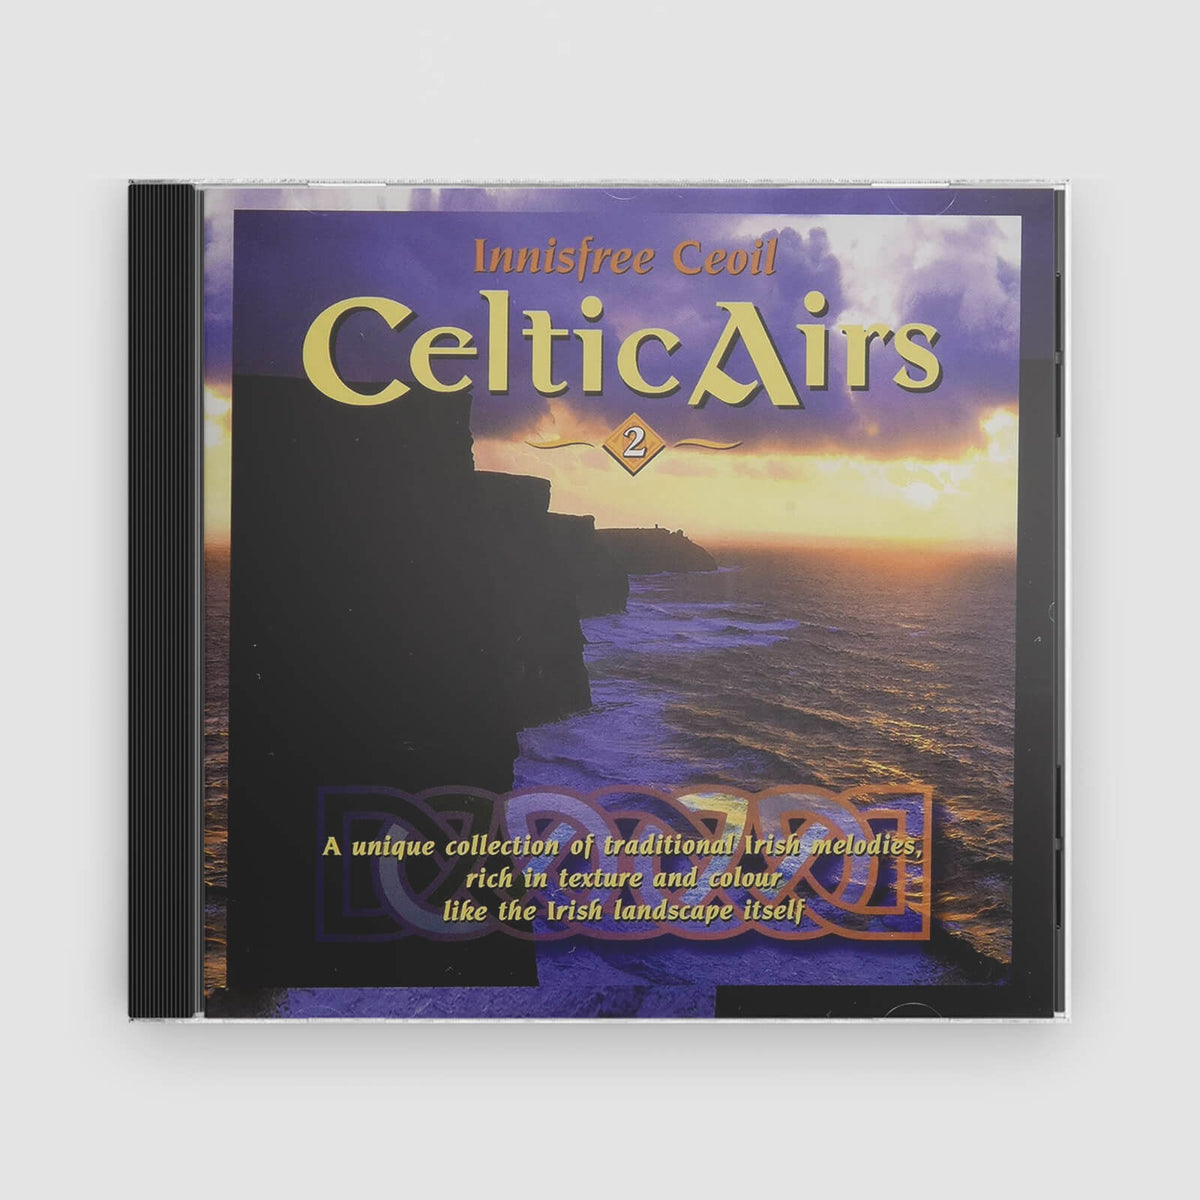 Innisfree Ceoil : Celtic Airs Vol. 2